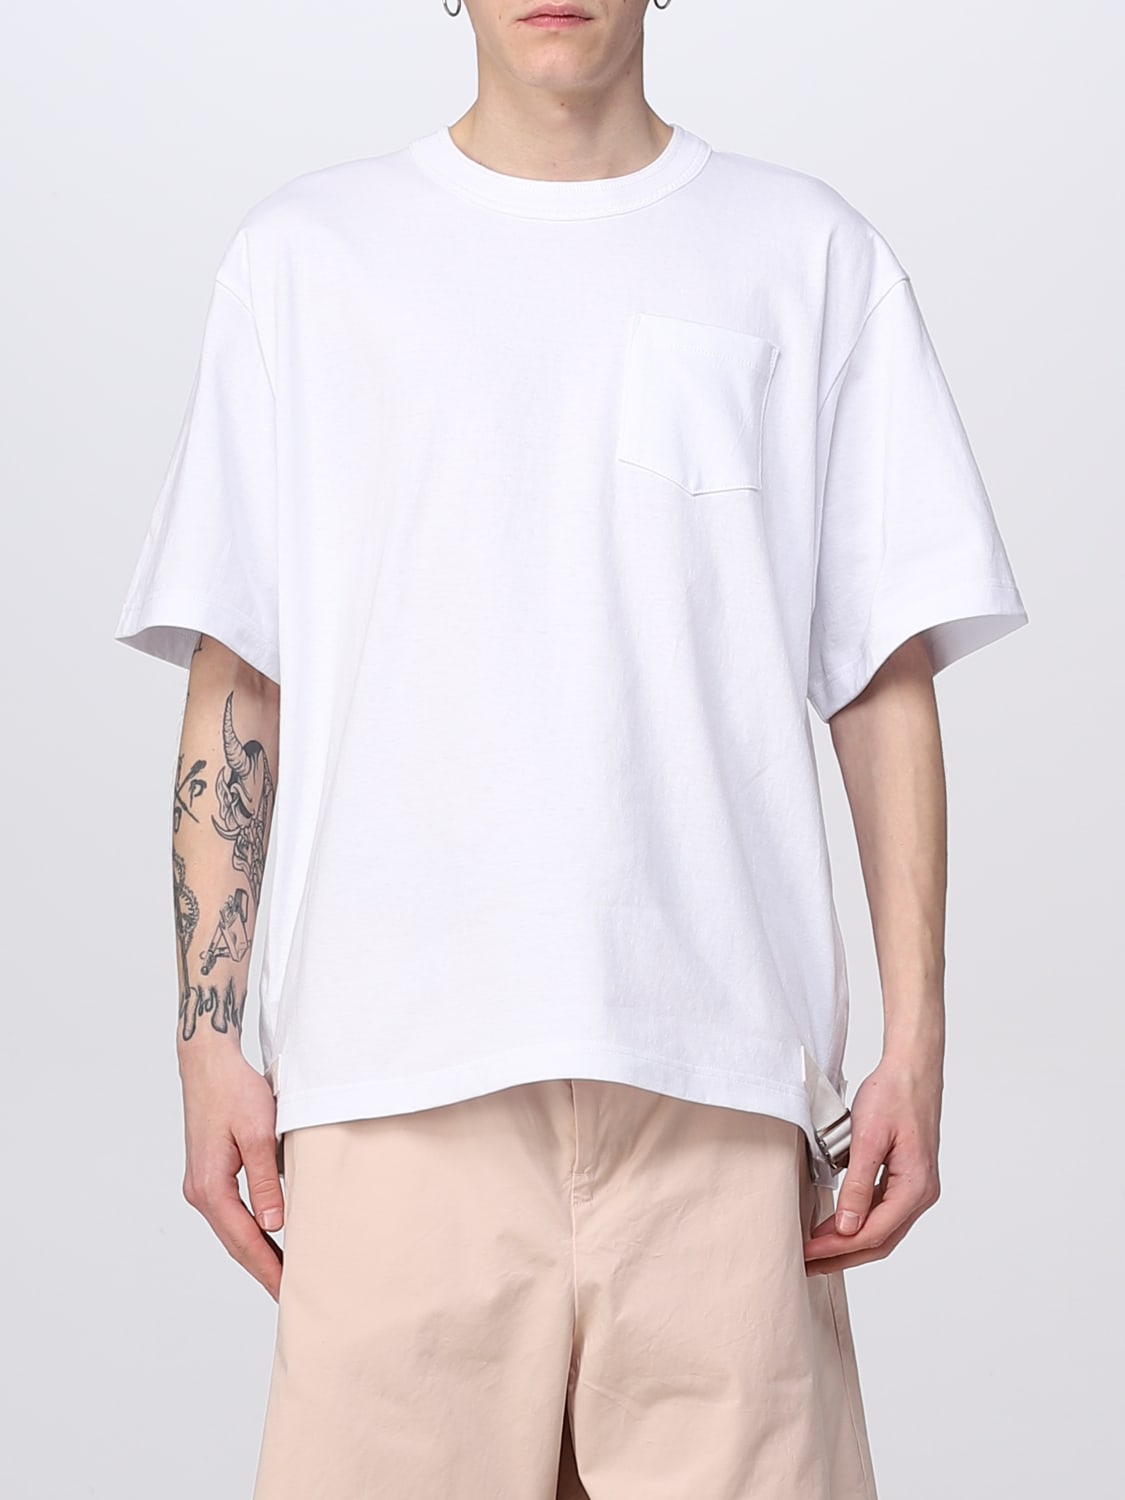 Sacai Outlet: t-shirt for man - White | Sacai t-shirt 2303061M